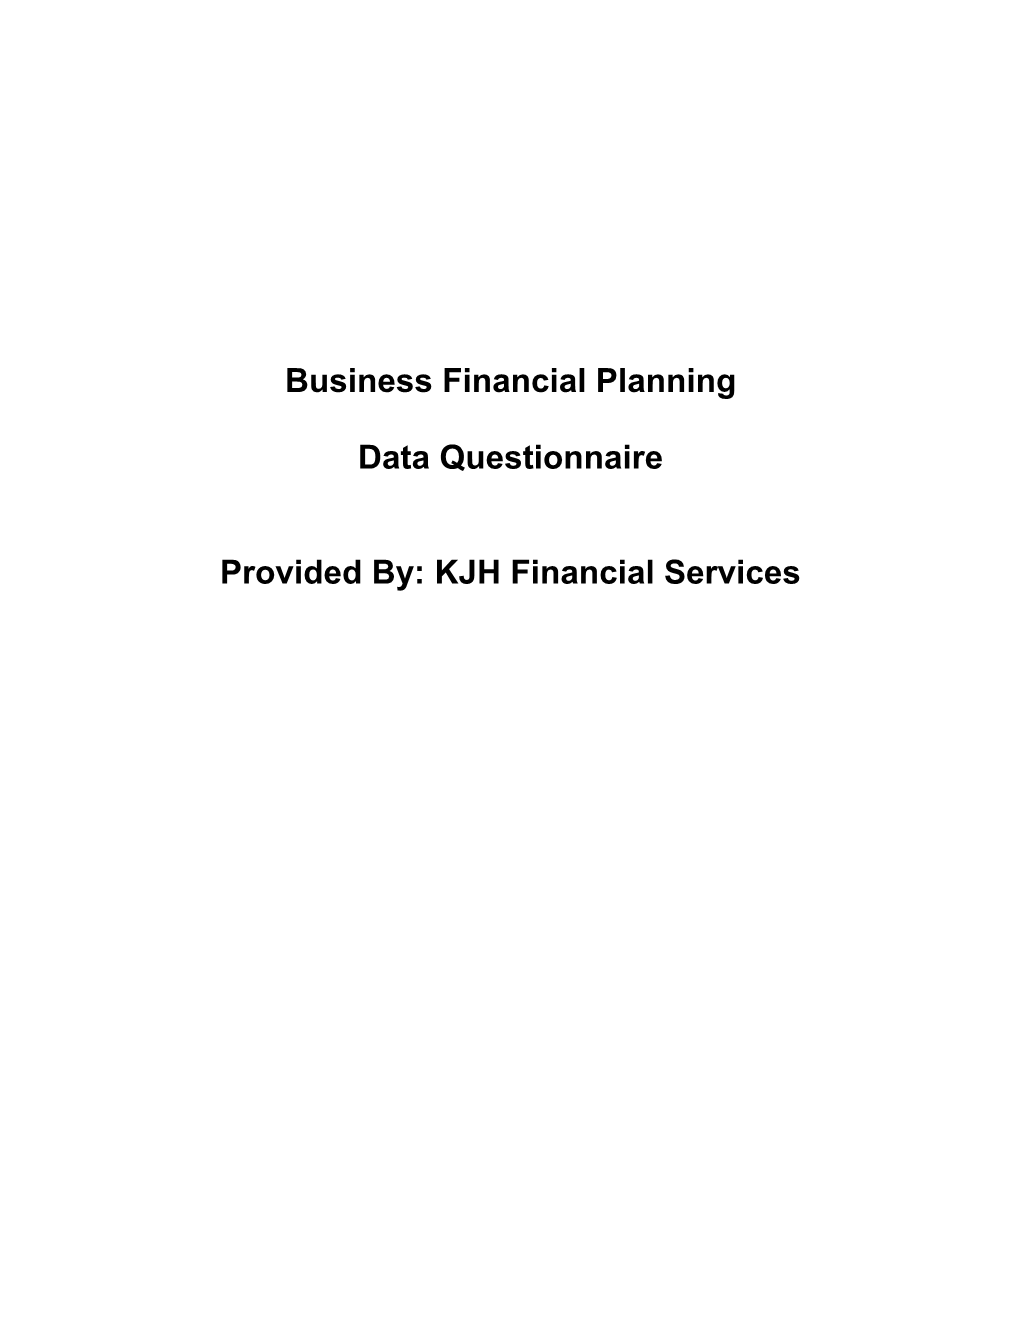 Business Financial Planning Data Questionnaire